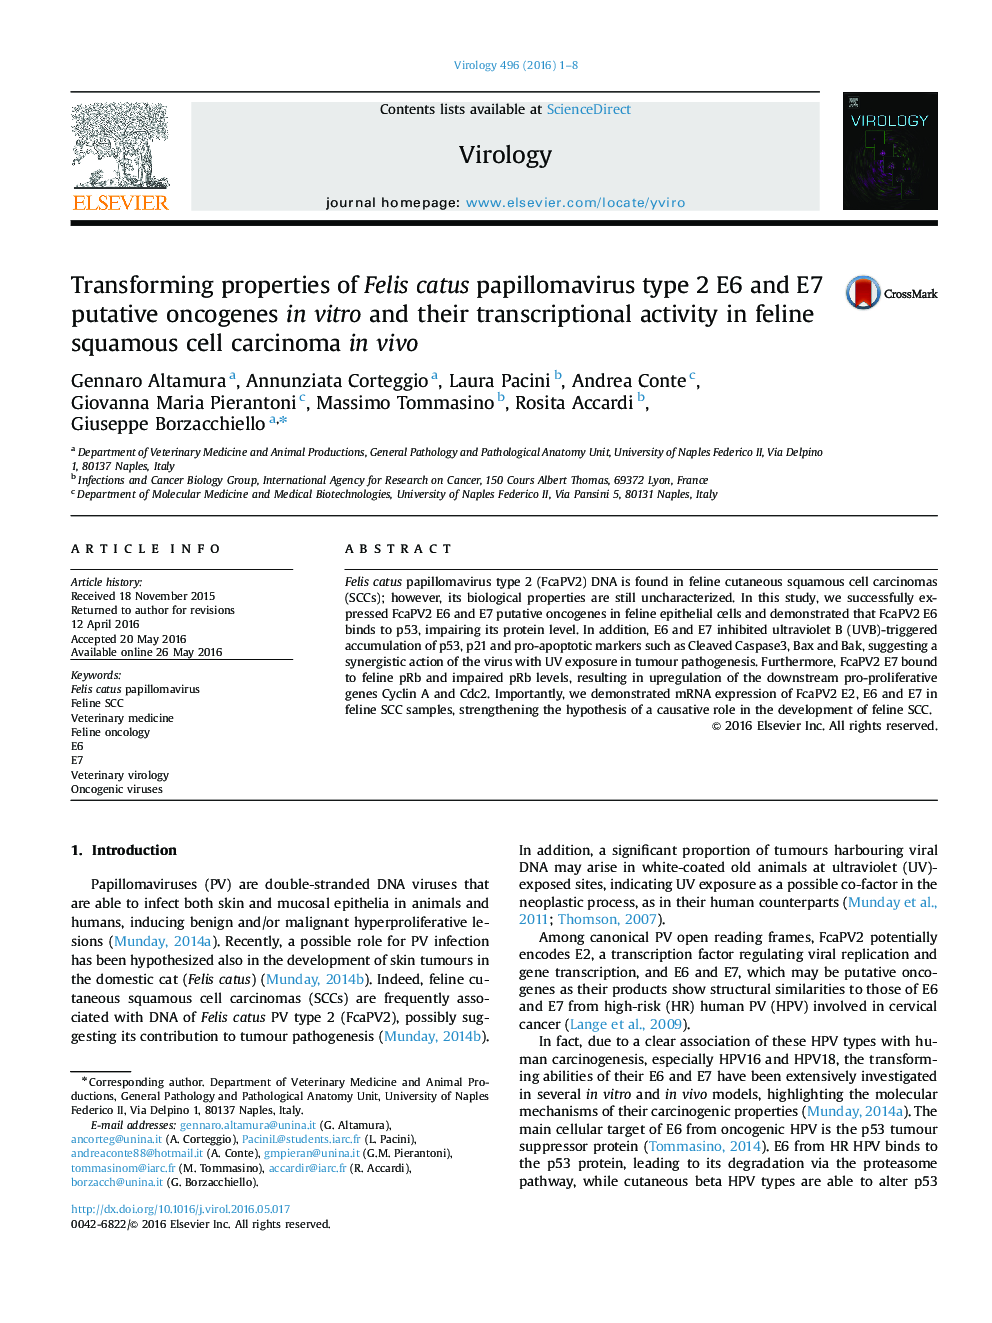 Transforming properties of Felis catus papillomavirus type 2 E6 and E7 putative oncogenes in vitro and their transcriptional activity in feline squamous cell carcinoma in vivo